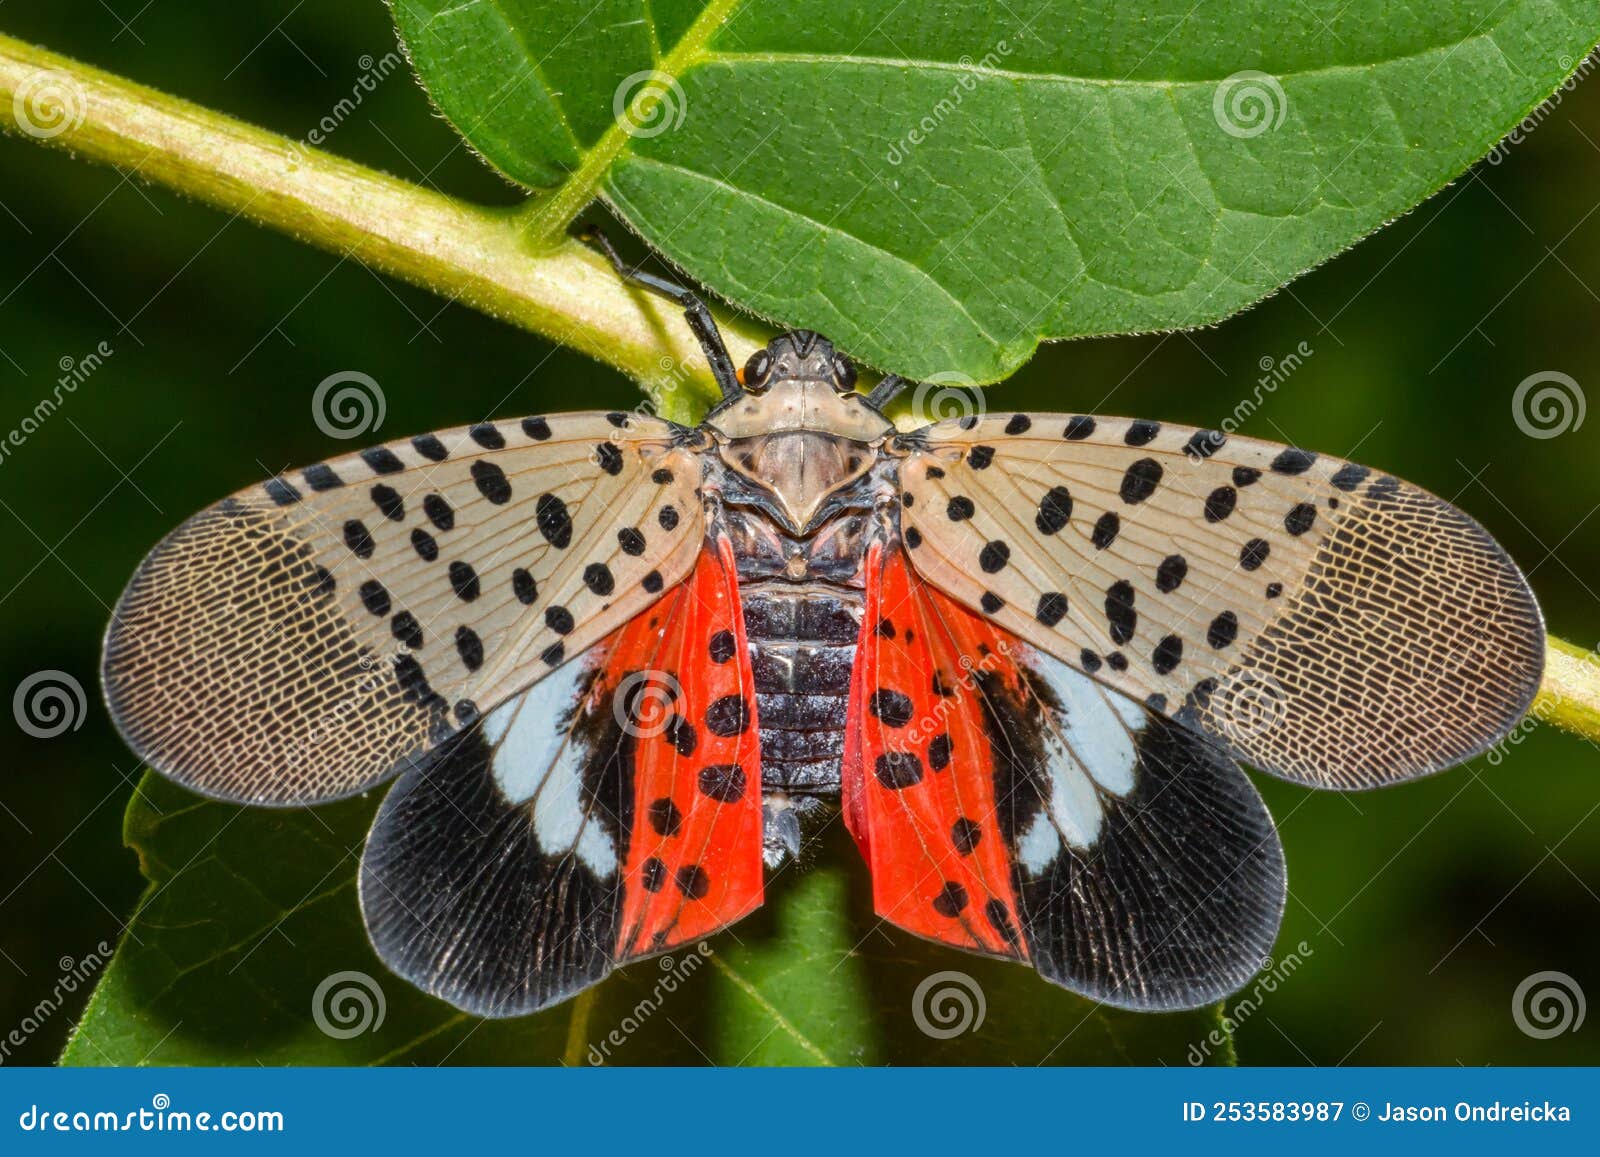 spotted lanternfly - lycorma delicatula